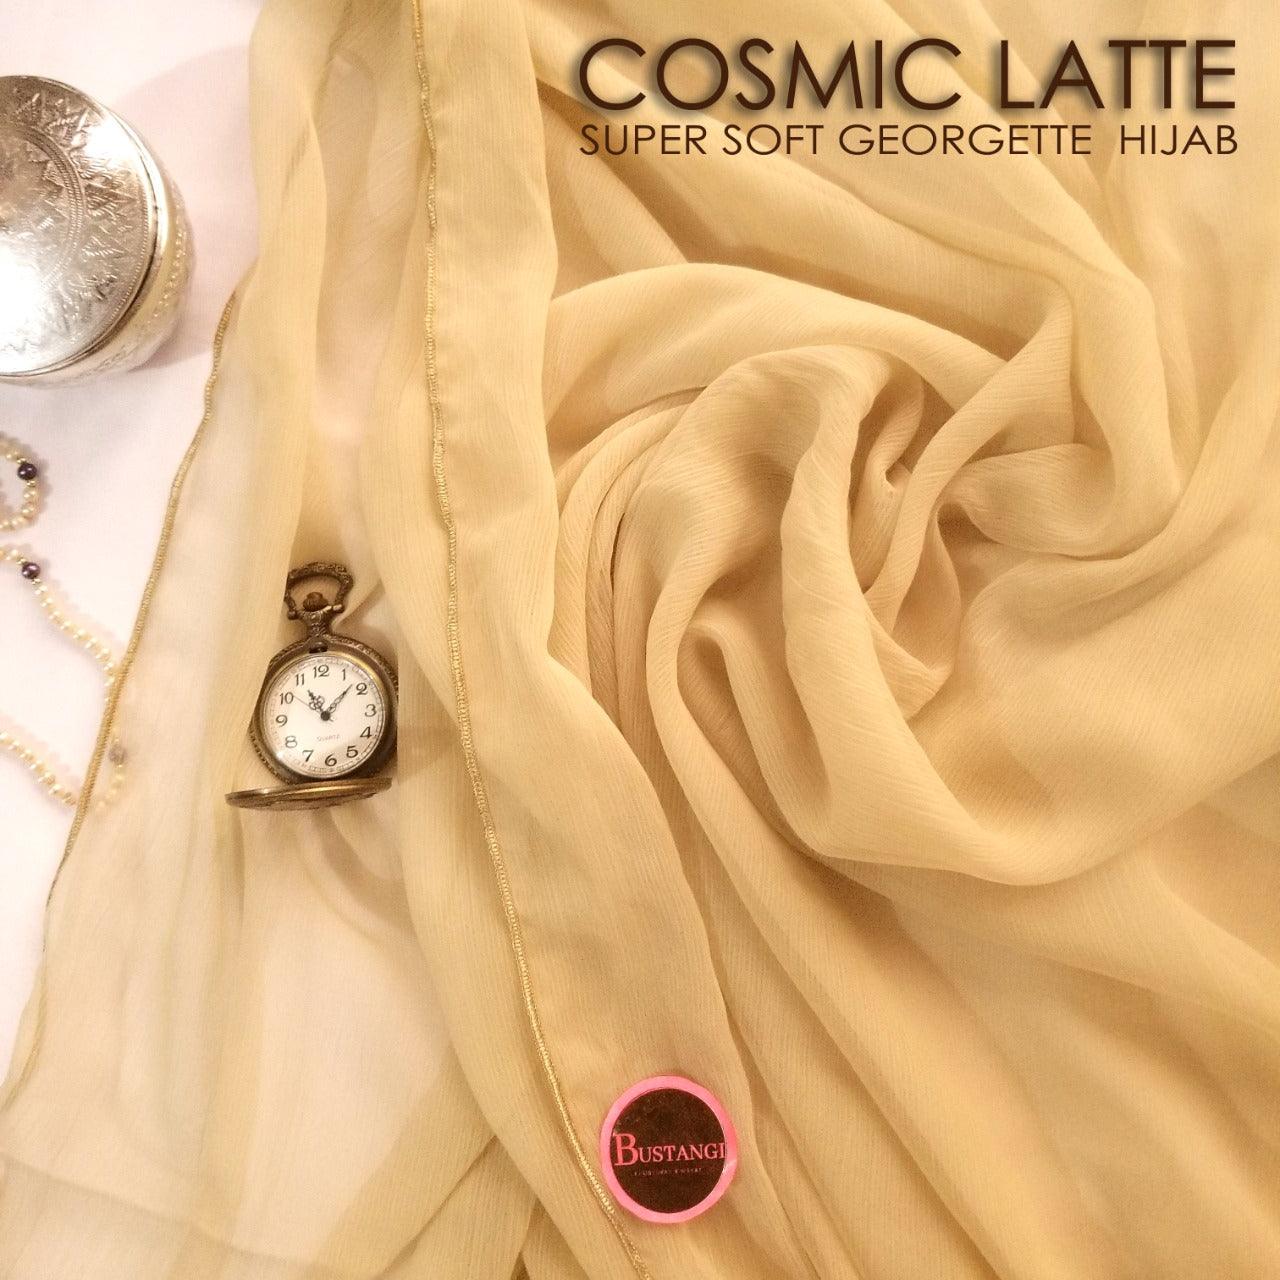 Cosmic Latte Georgette  Hijab - Bustangi